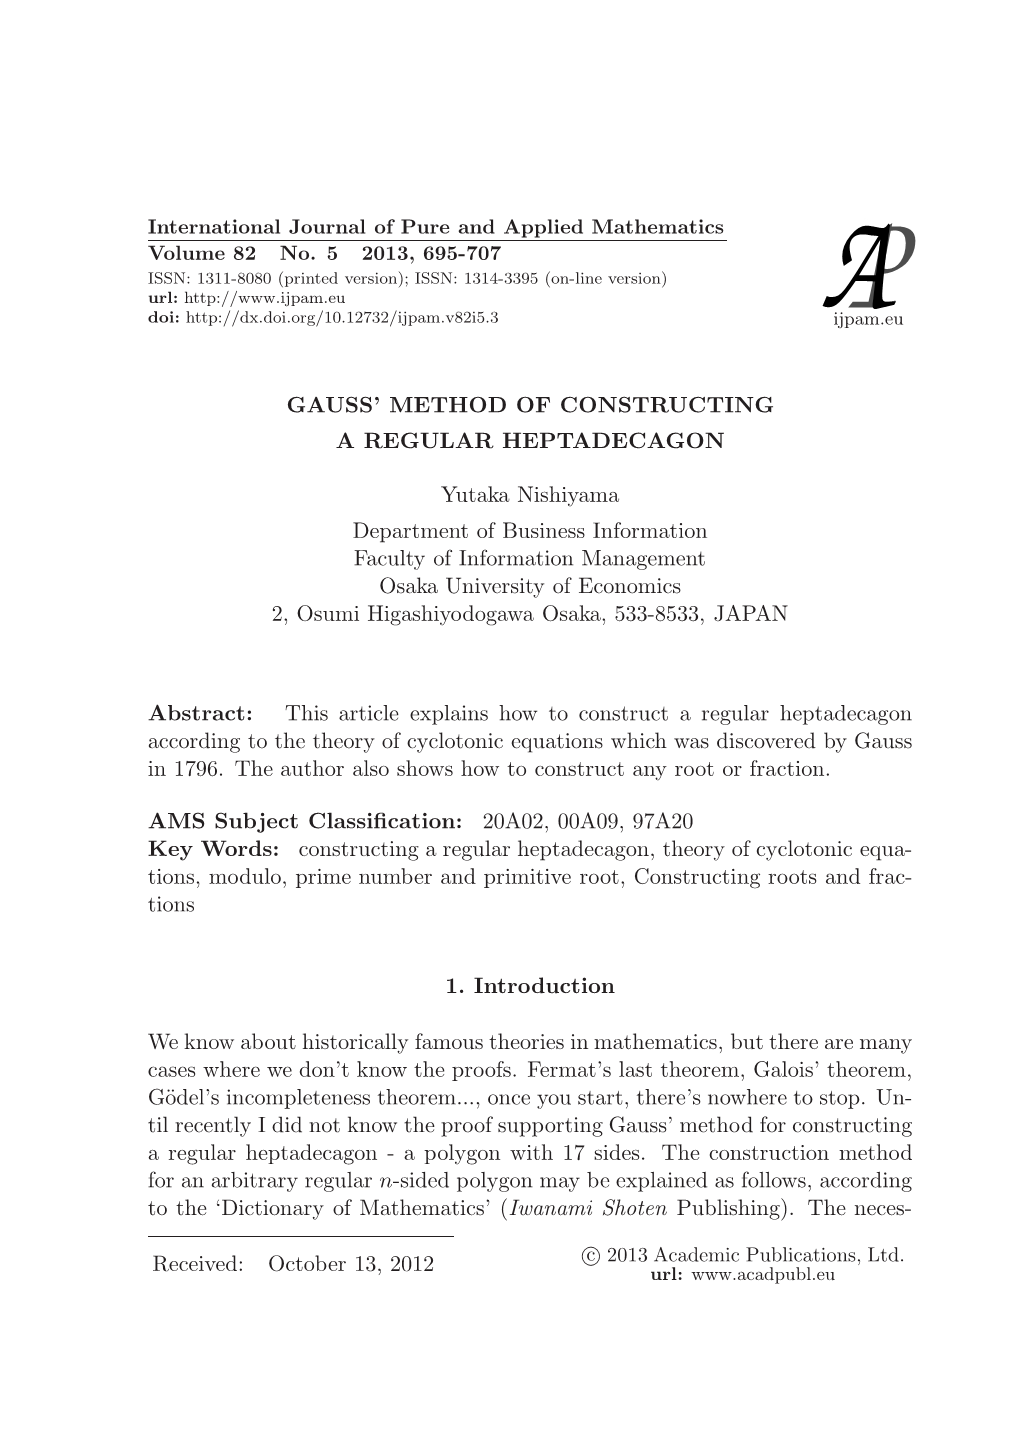 Gauss' Method of Constructing a Regular